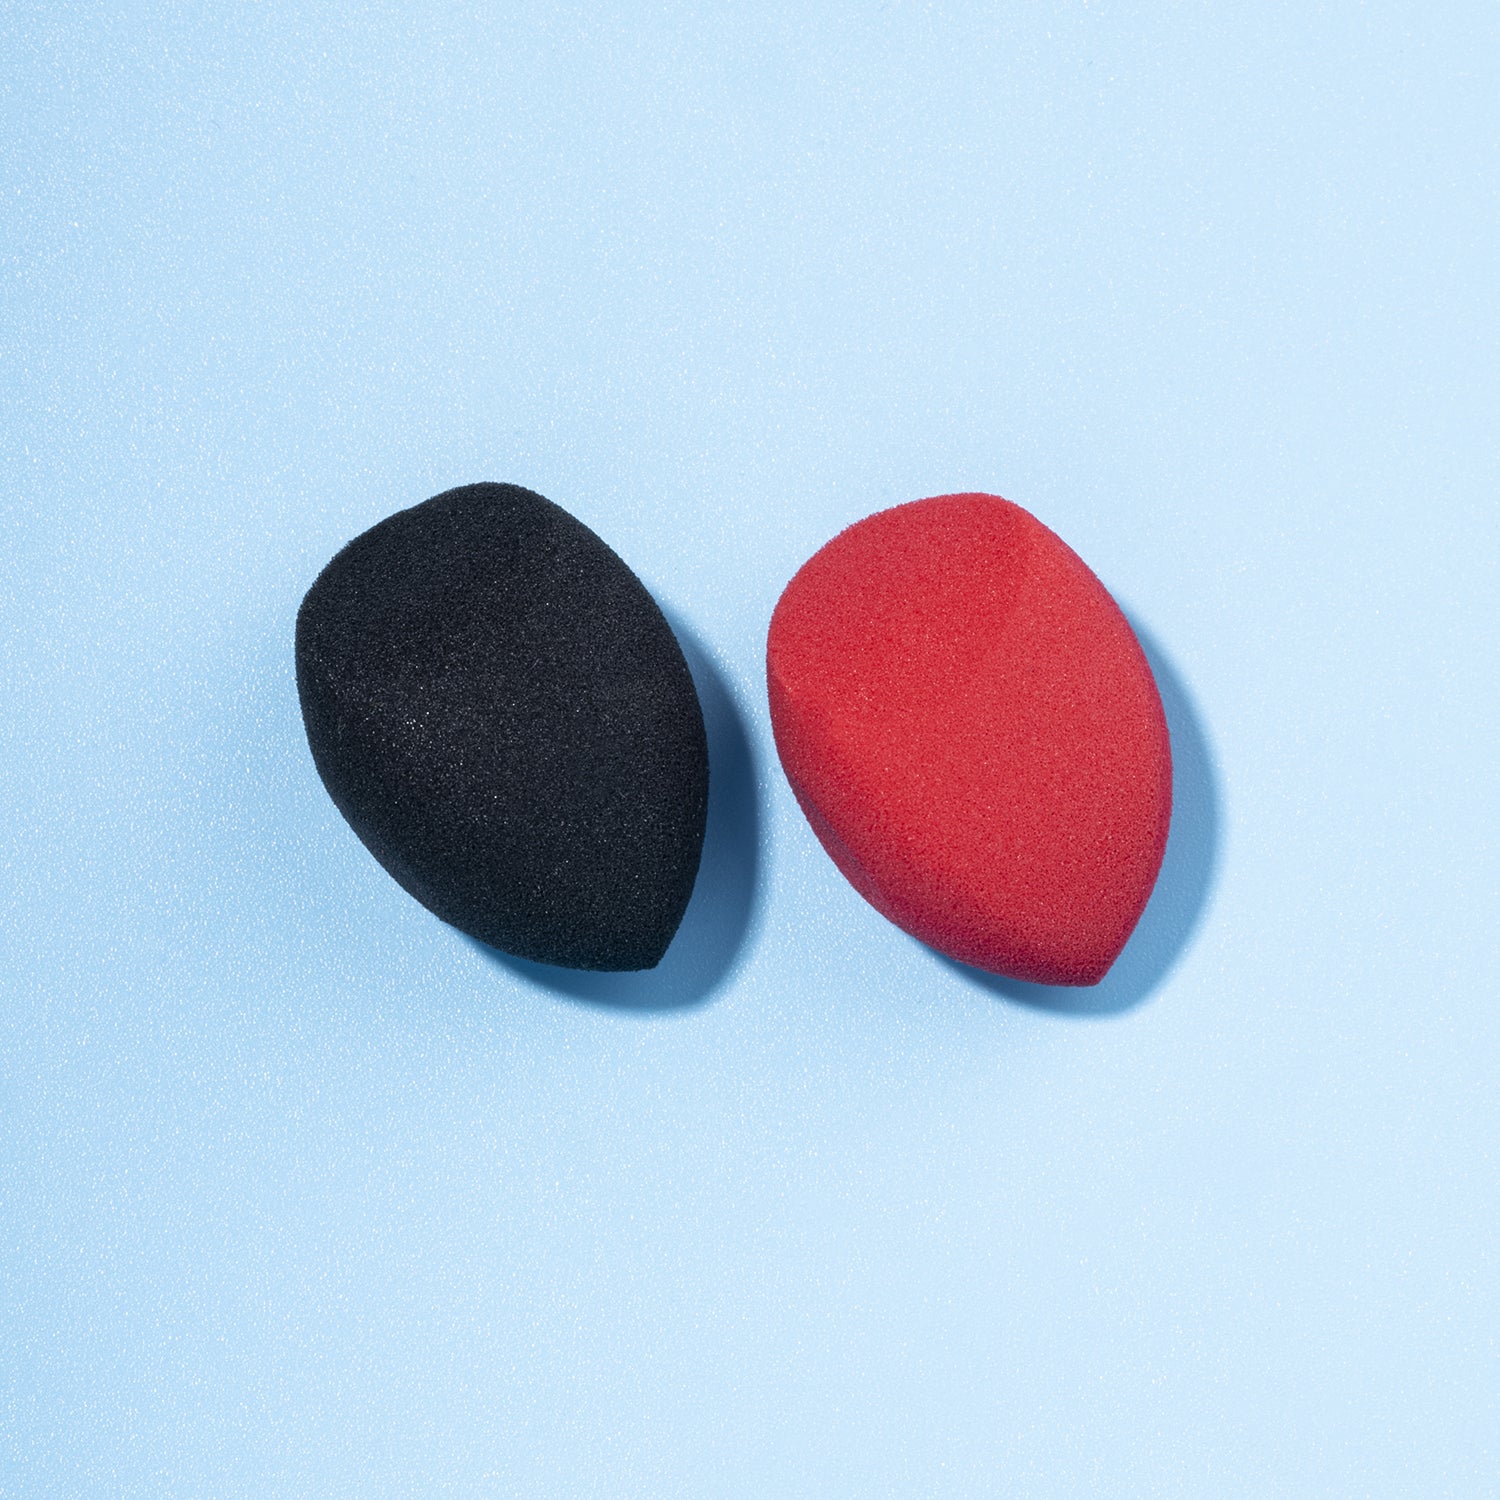 PAC Cosmetics Mini Sponge Set (Olive Cut) (Black, Red) (2 Pc)